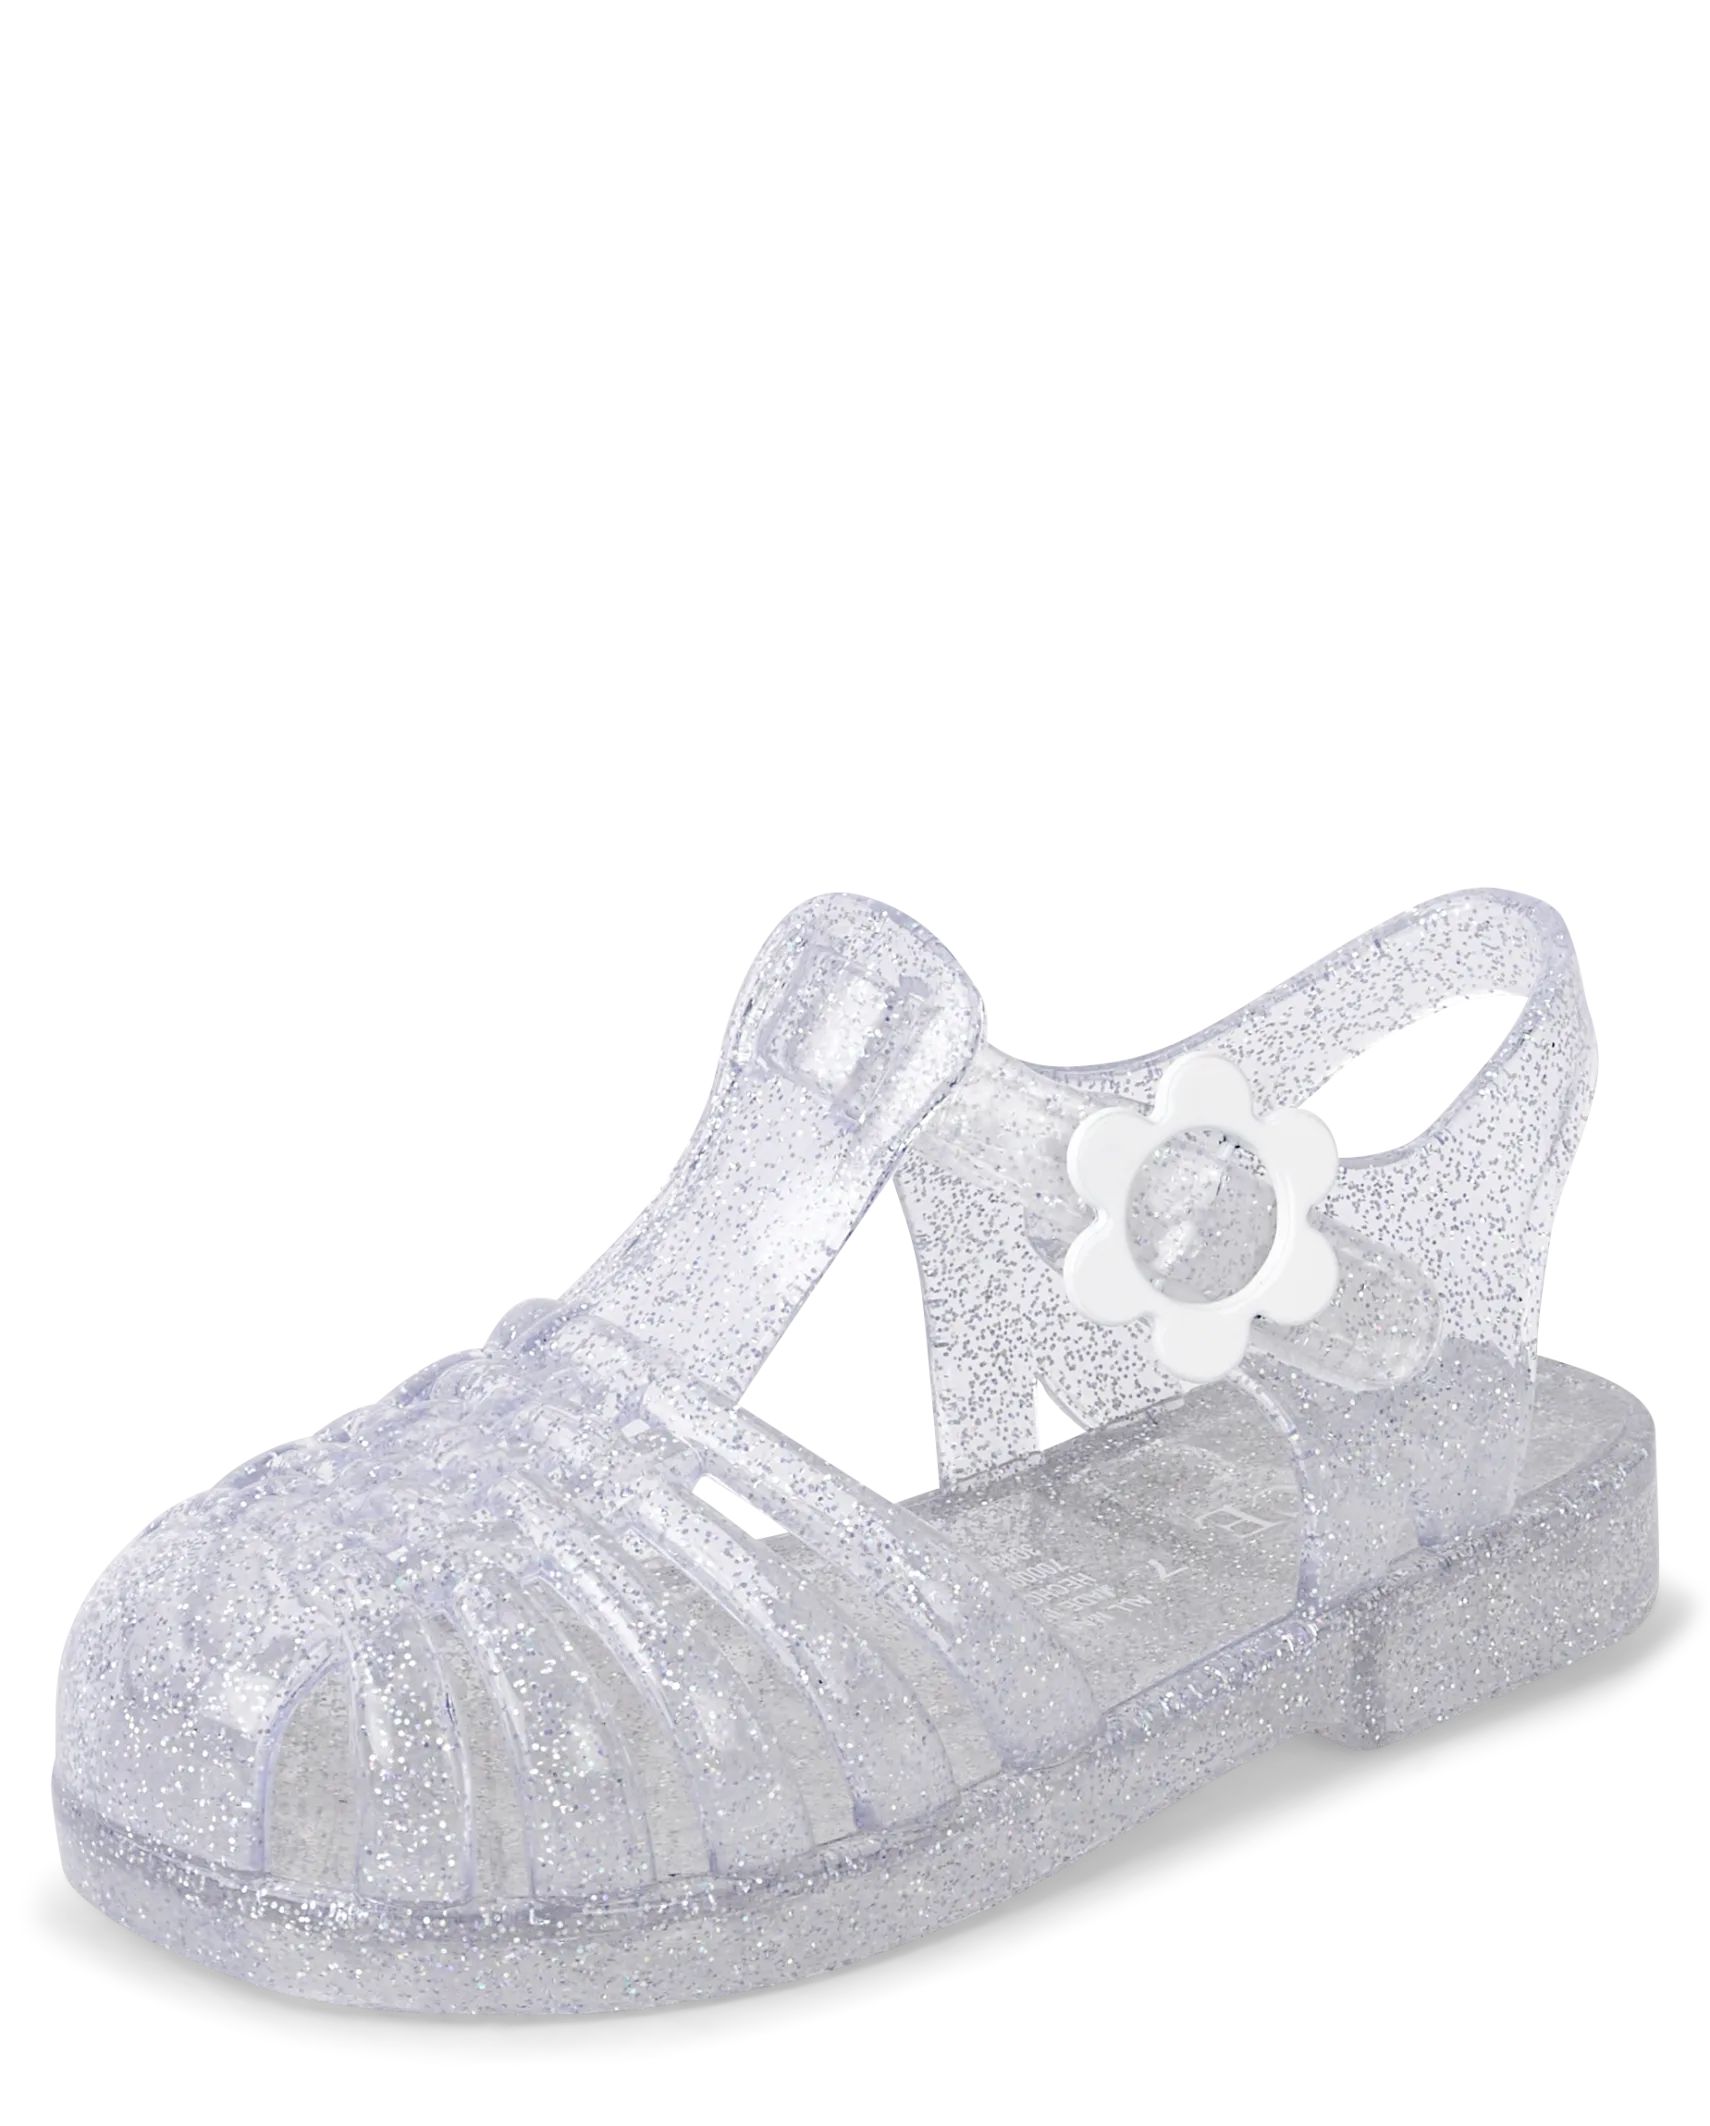 Toddler Girls Glitter Jelly Sandals | The Children's Place  - SILVER | The Children's Place